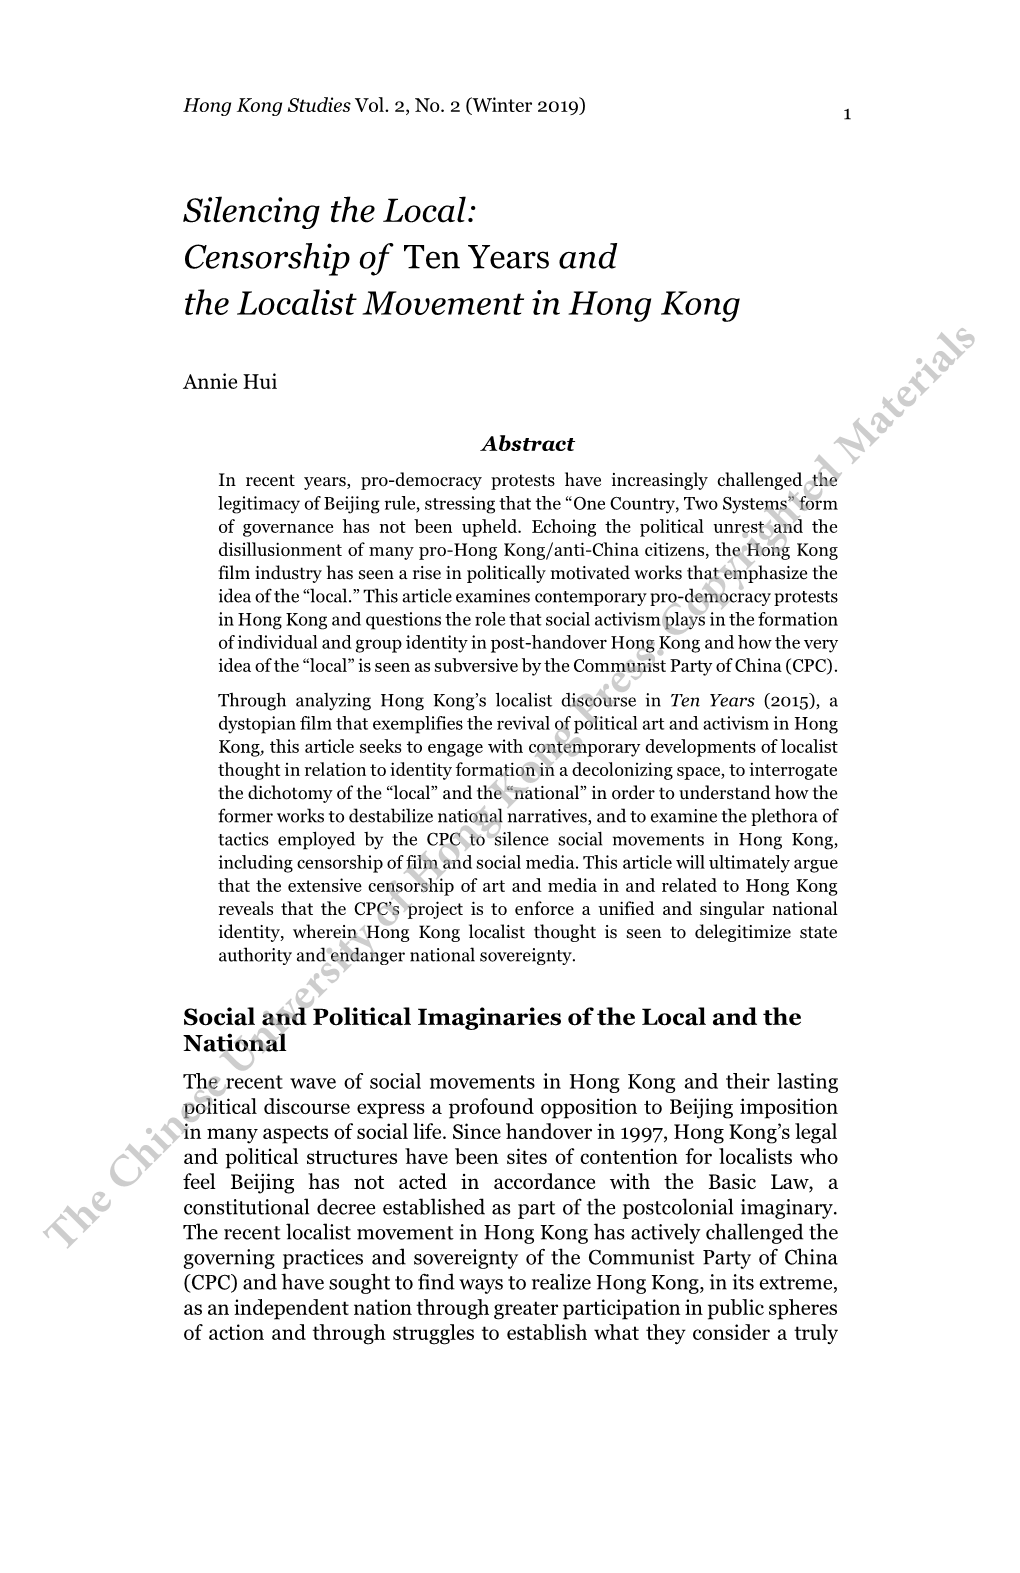 The Chinese University of Hong Kong Press: Copyrighted Materials